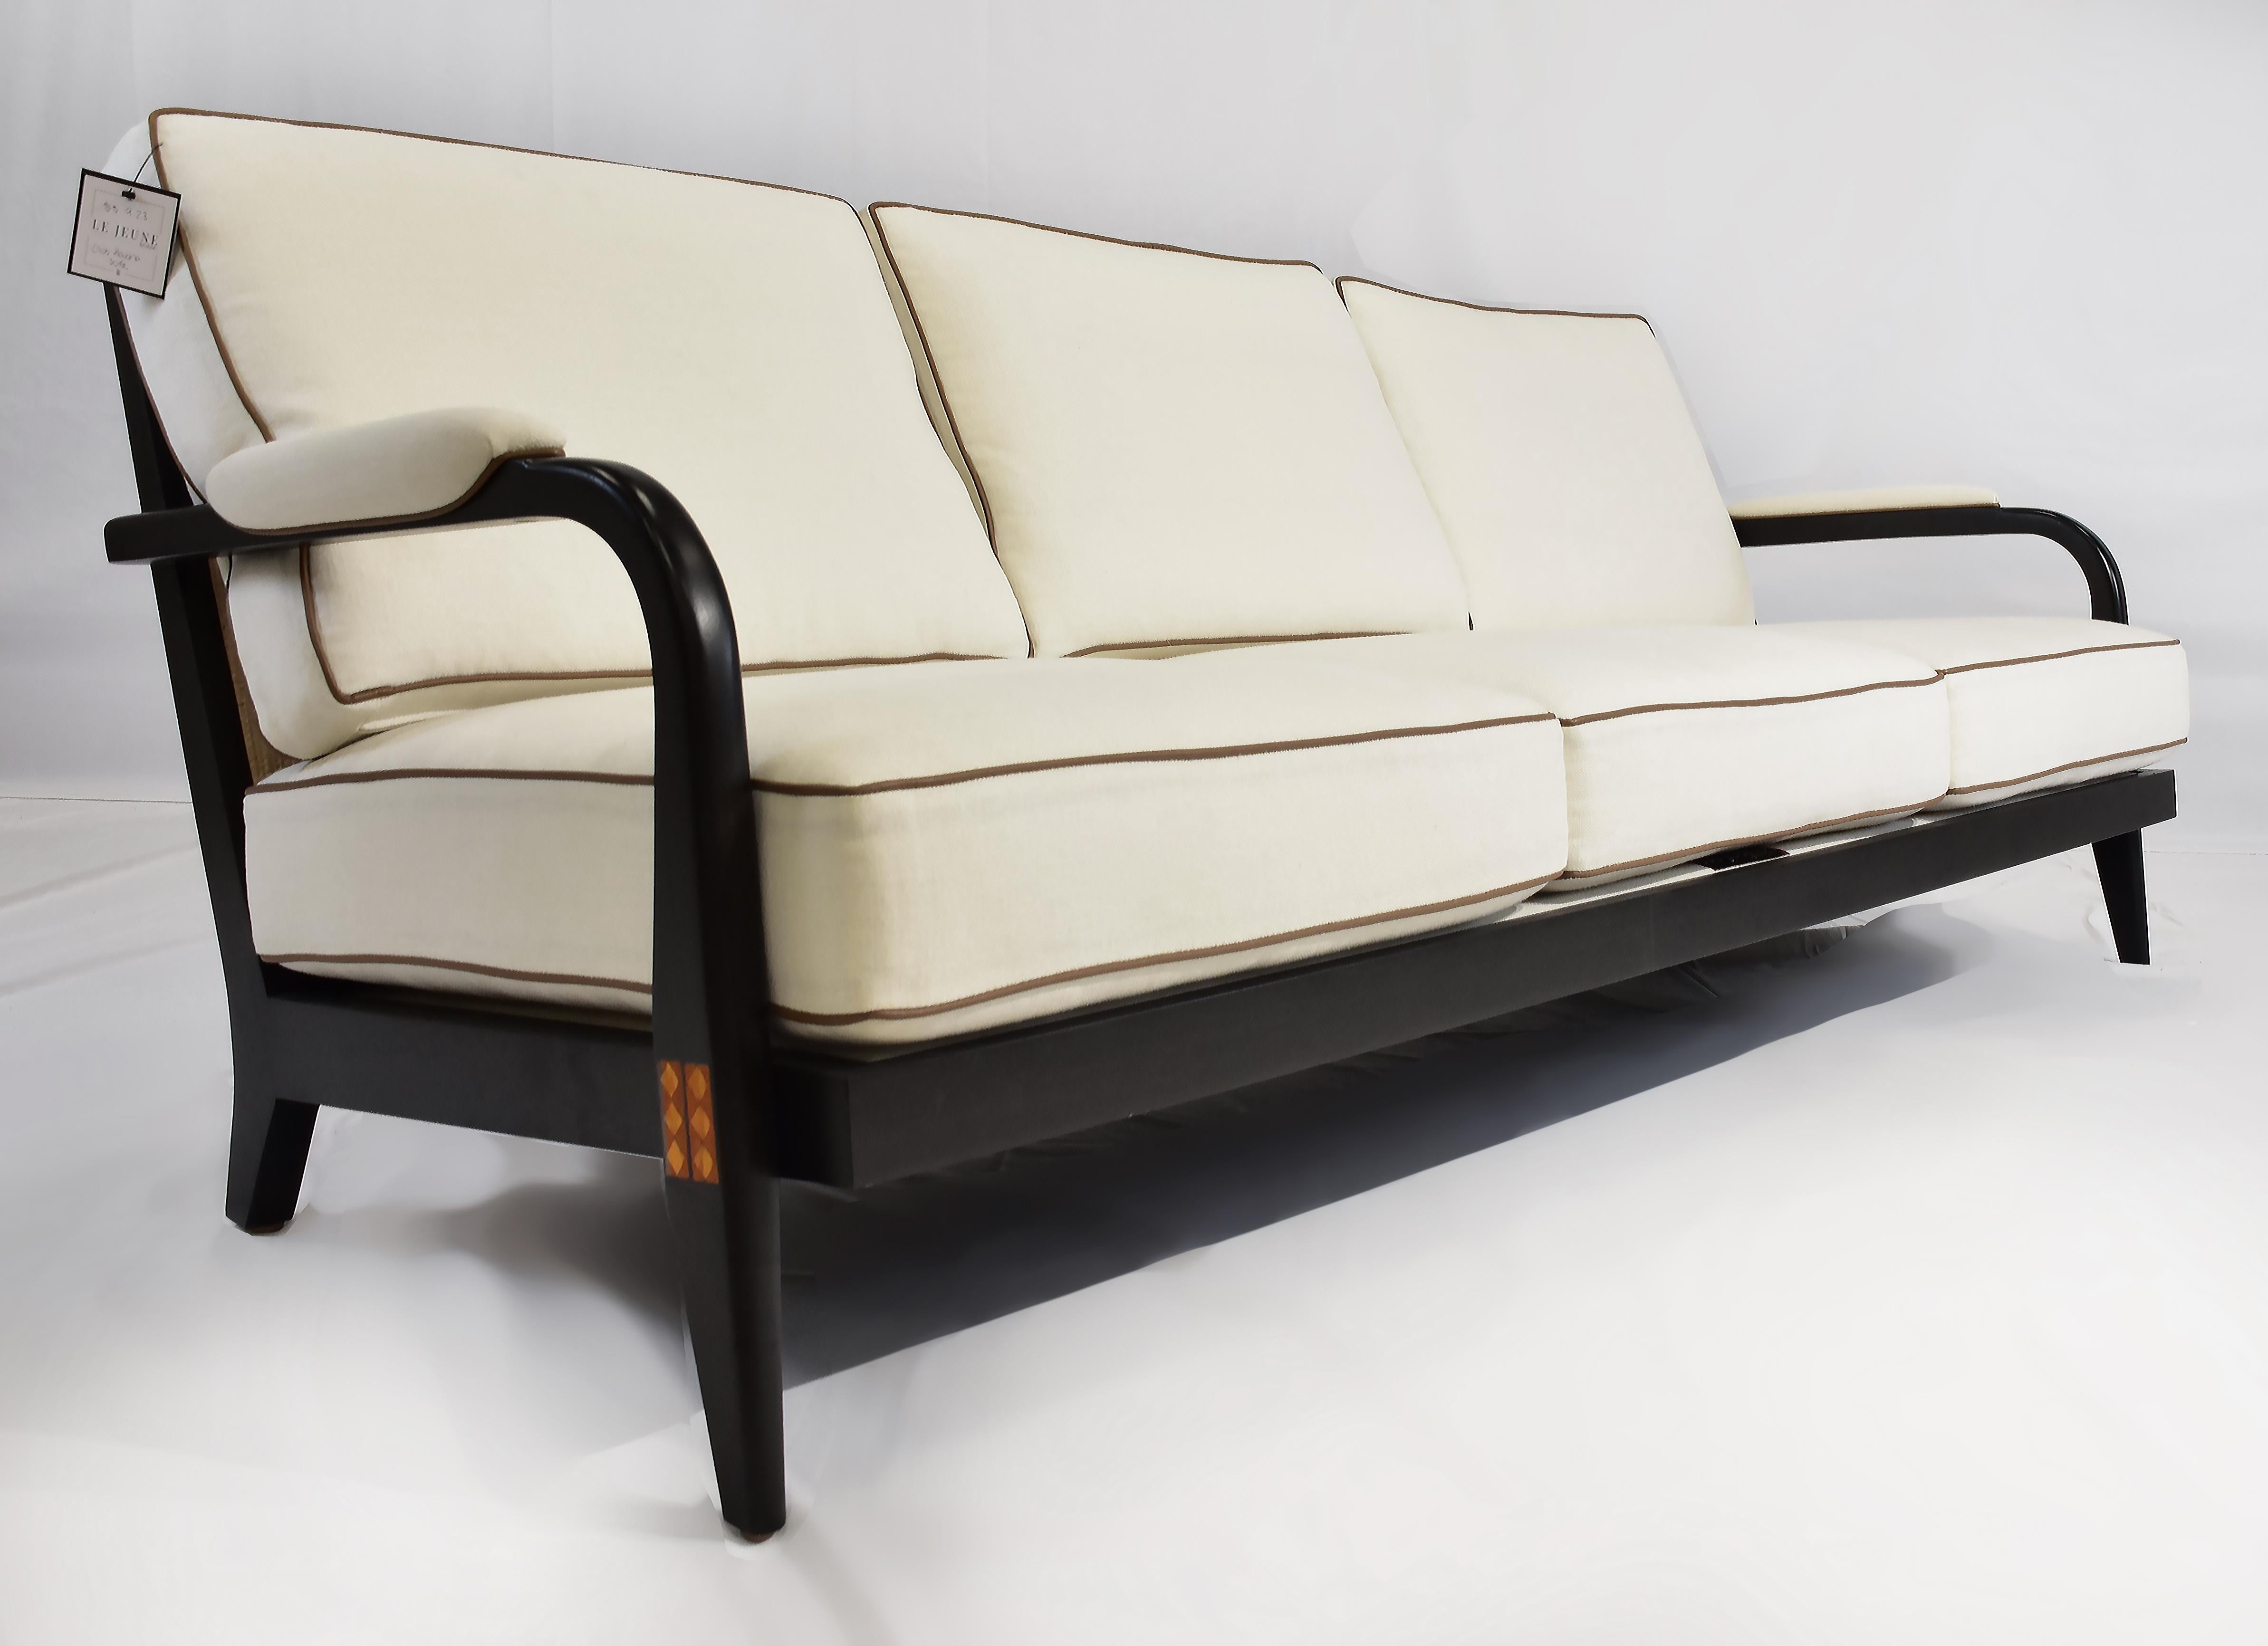 American Le June Upholstery 3 Seat Club Havana Sofa Floor Model, Walnut Finished Mahogany For Sale